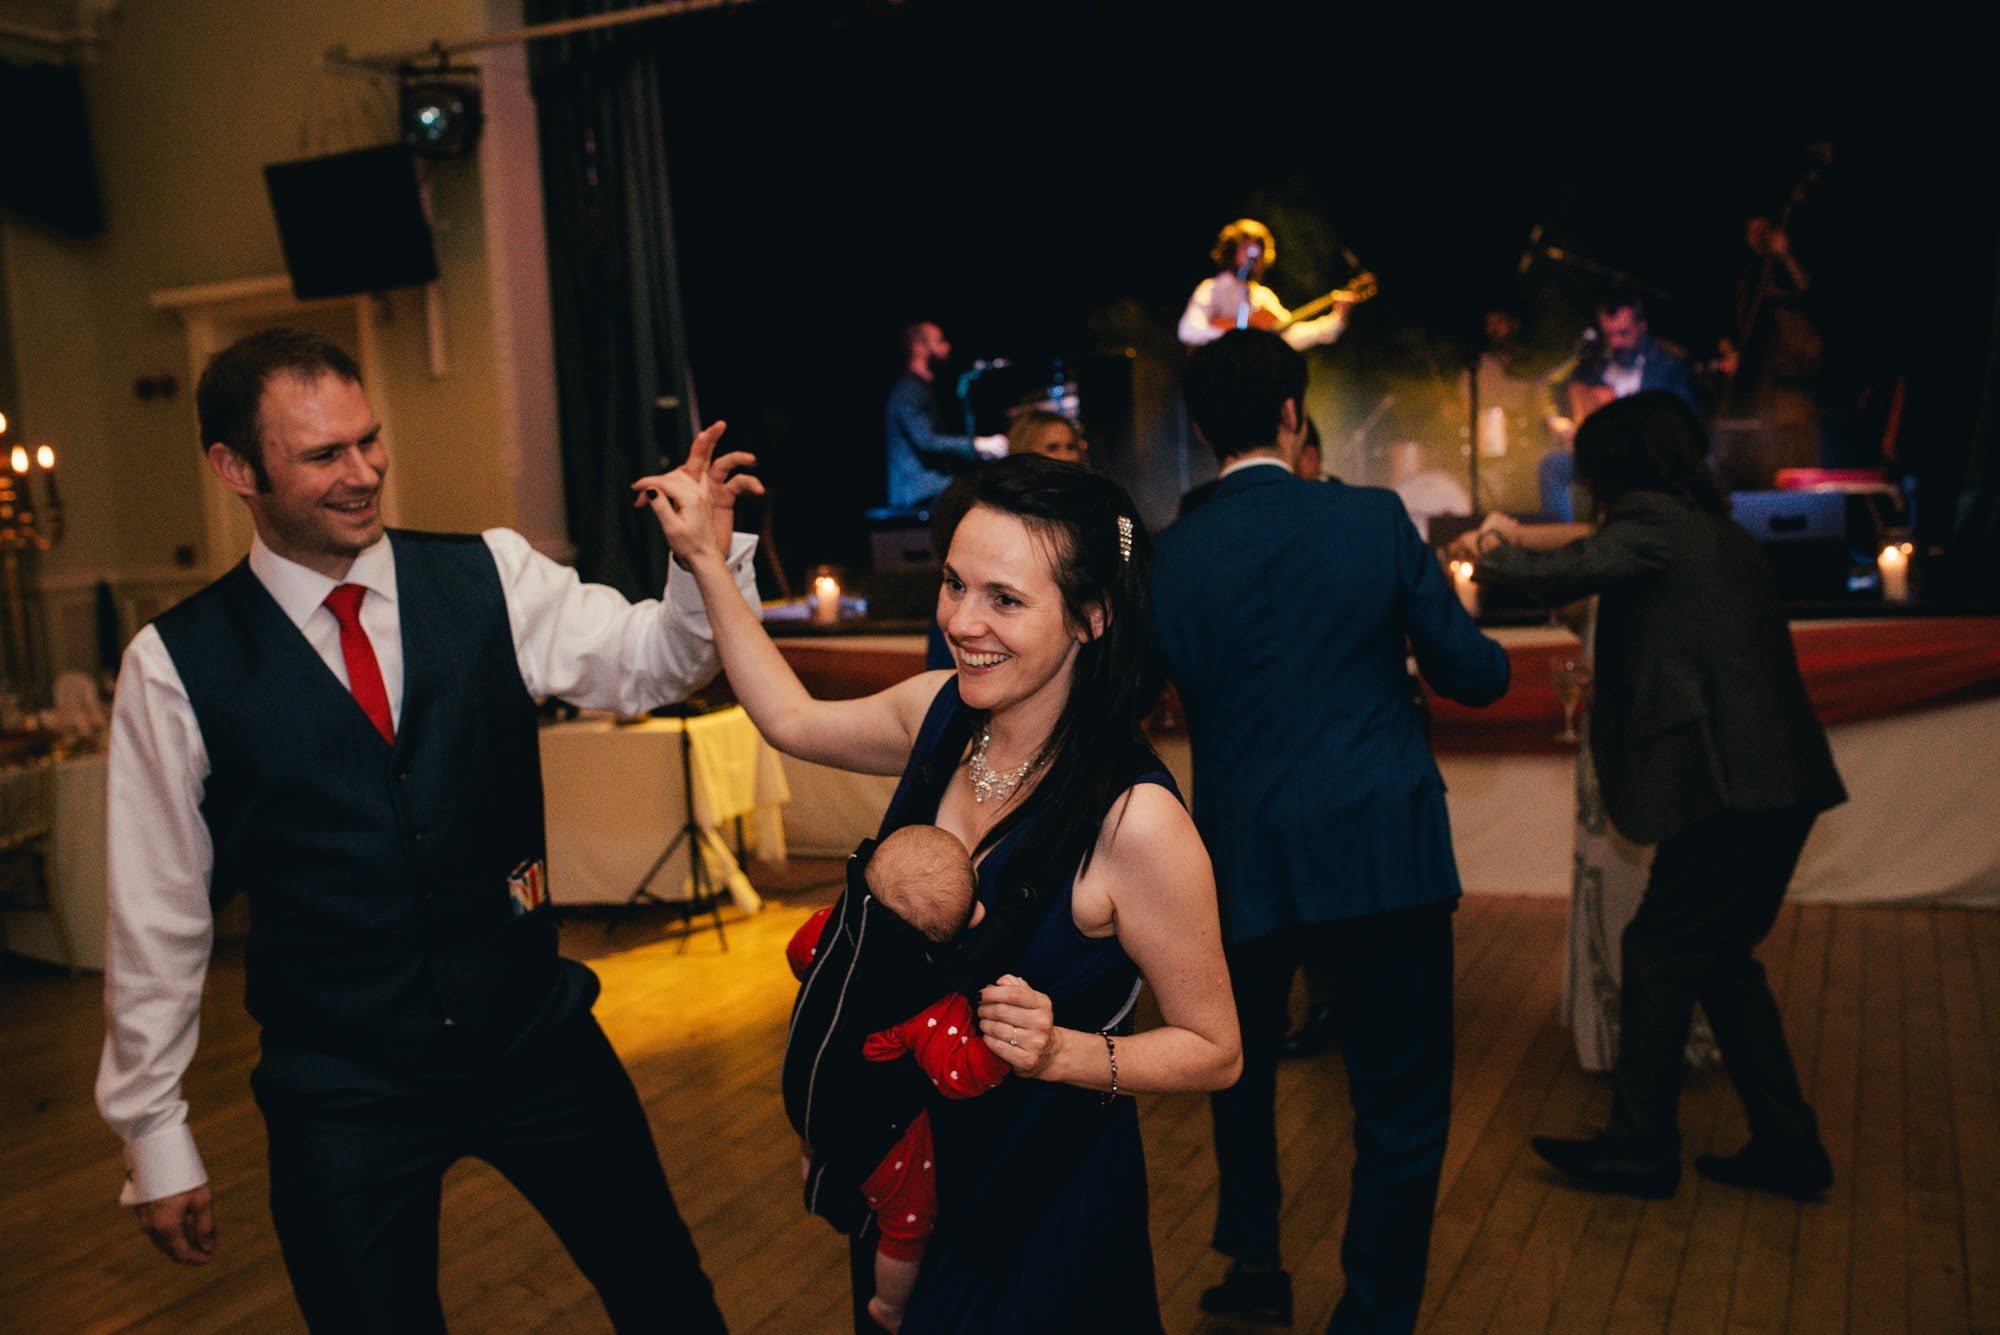 dancing family at a wedding